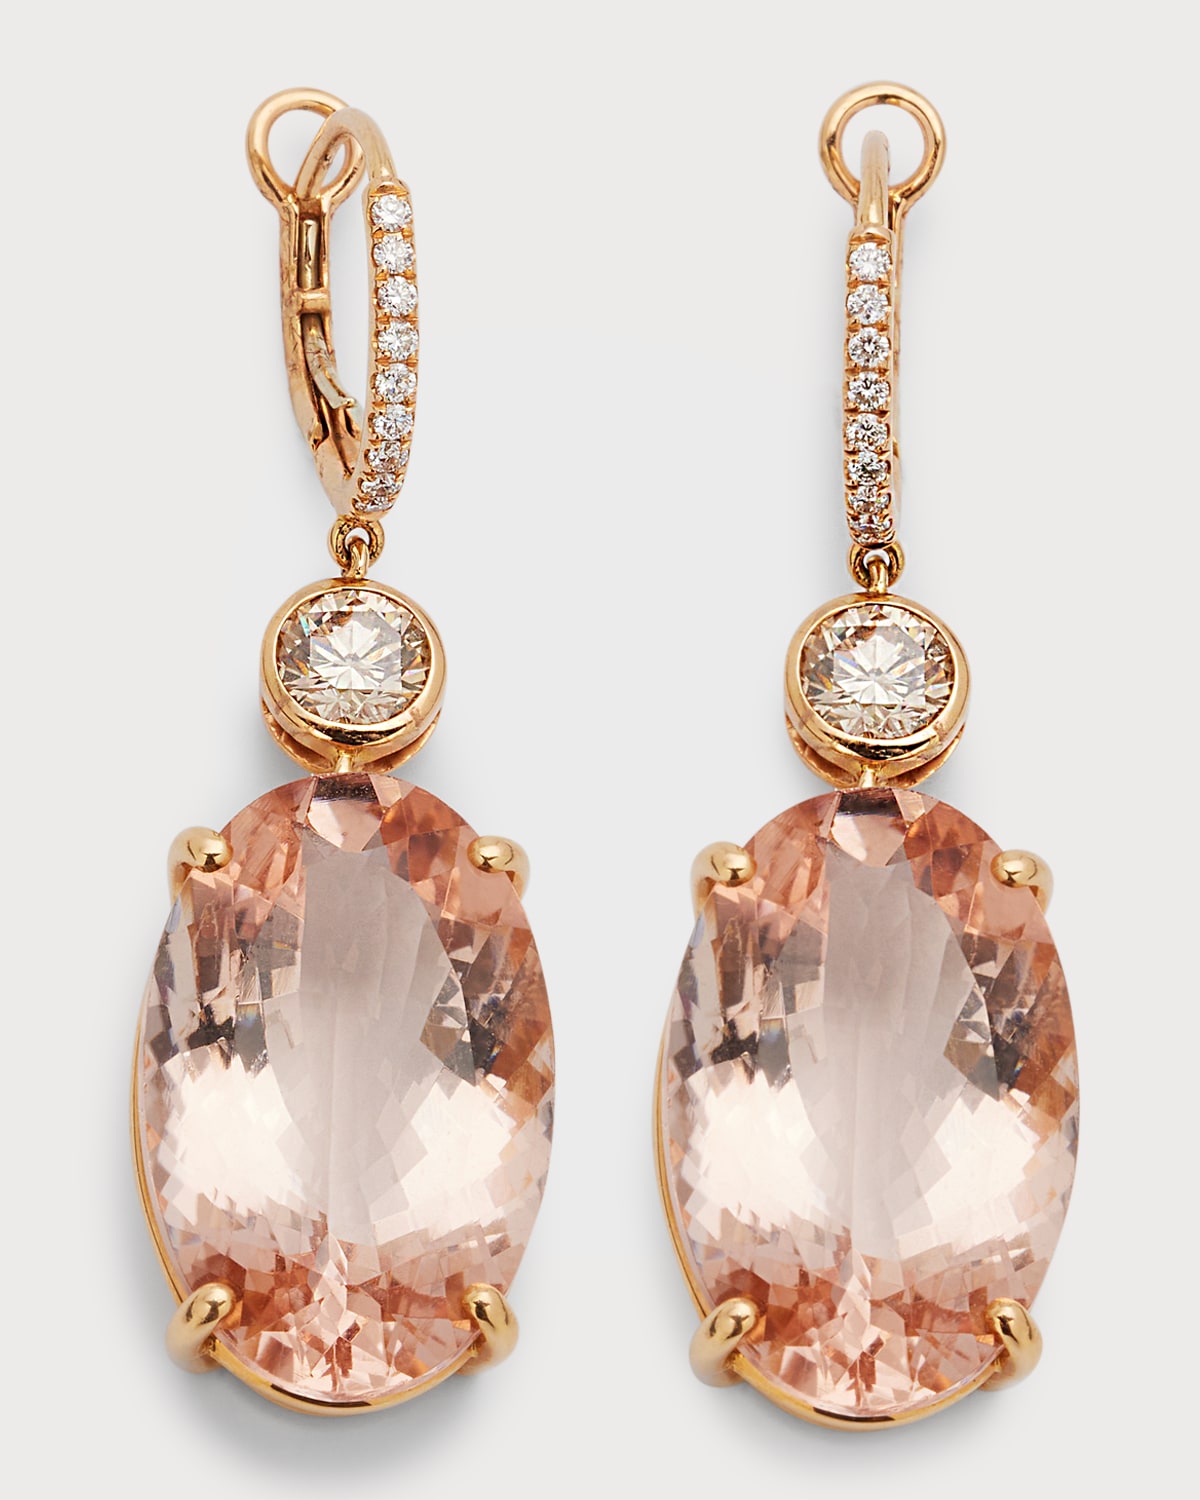 Alexander Laut 18k Rose Gold Earrings With Vs/gh Diamonds And Morganite